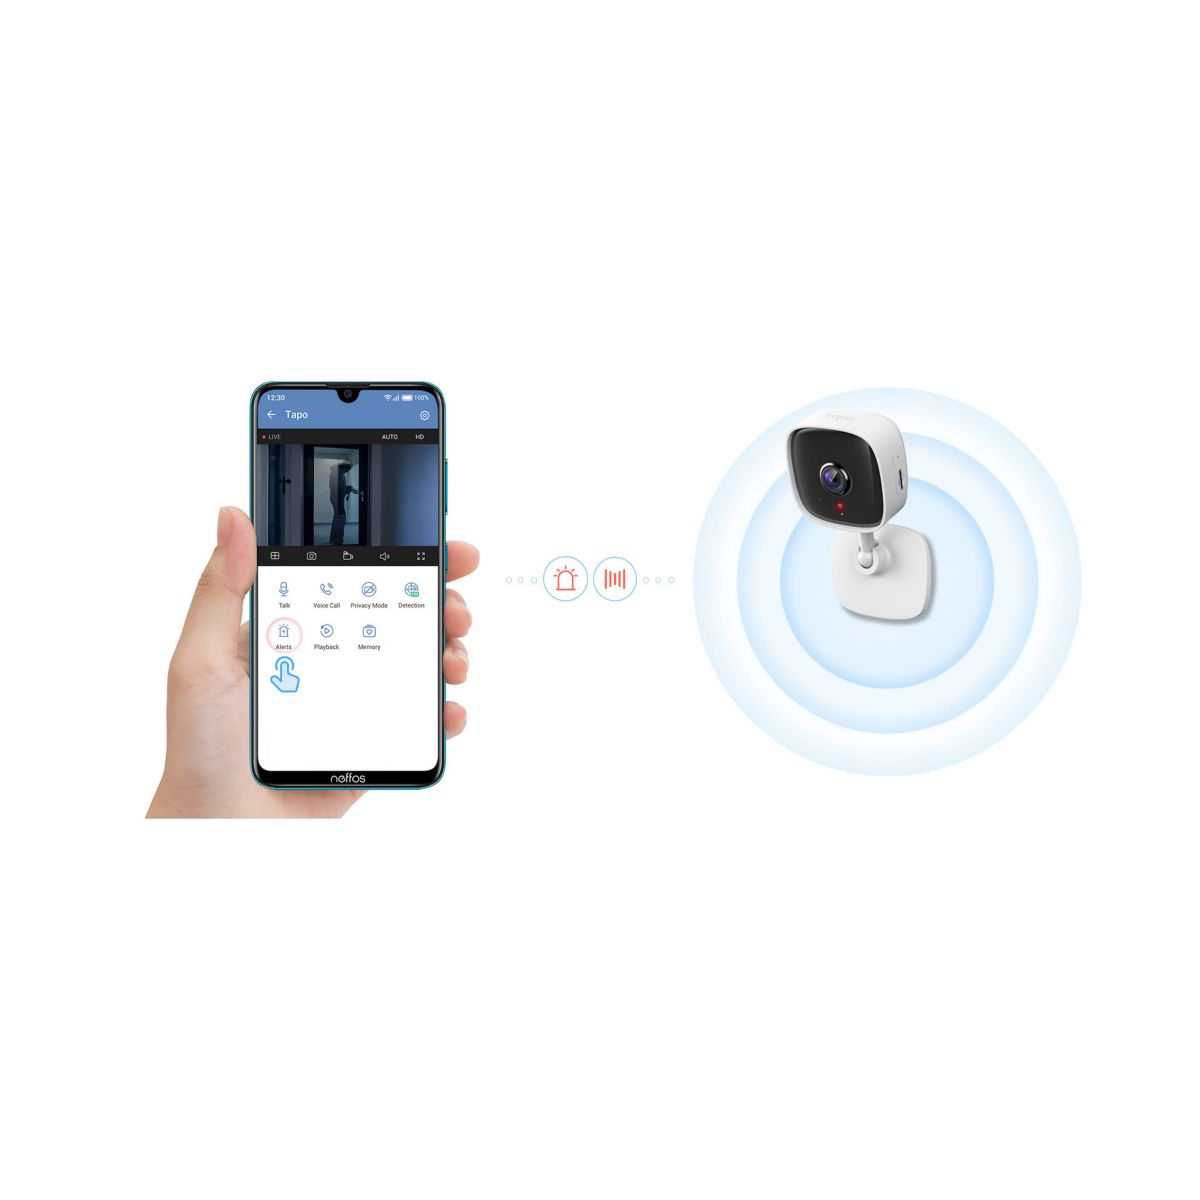 Camara Vigilancia Wifi Vision Nocturna 3mp Tp-link Tapo C110